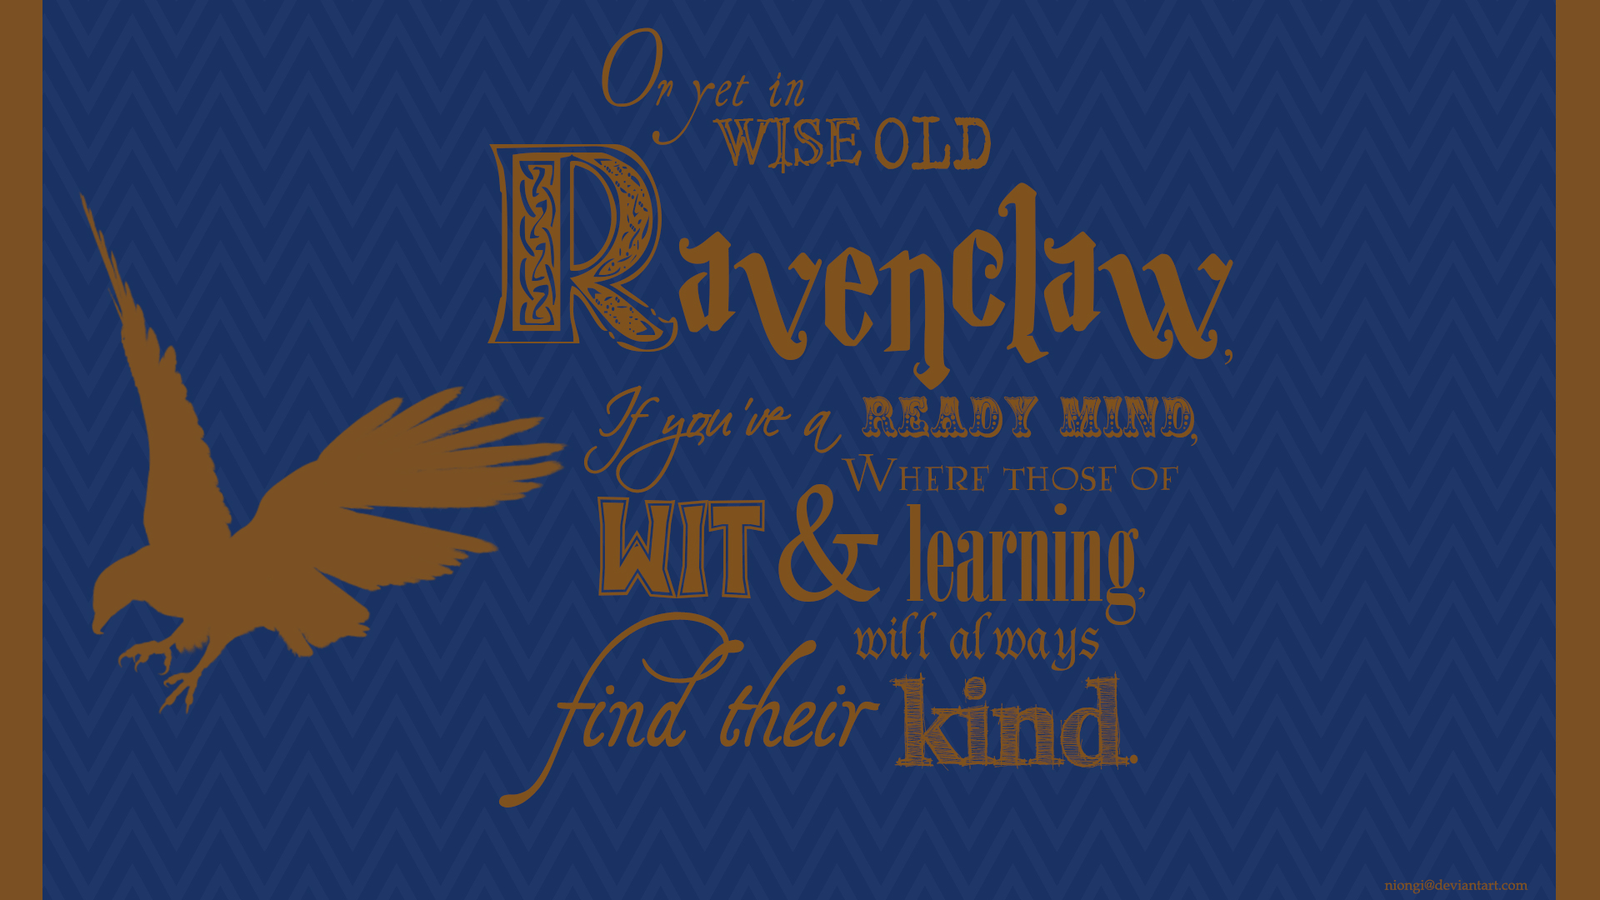 Harry Potter Ravenclaw Wallpaper 72 images